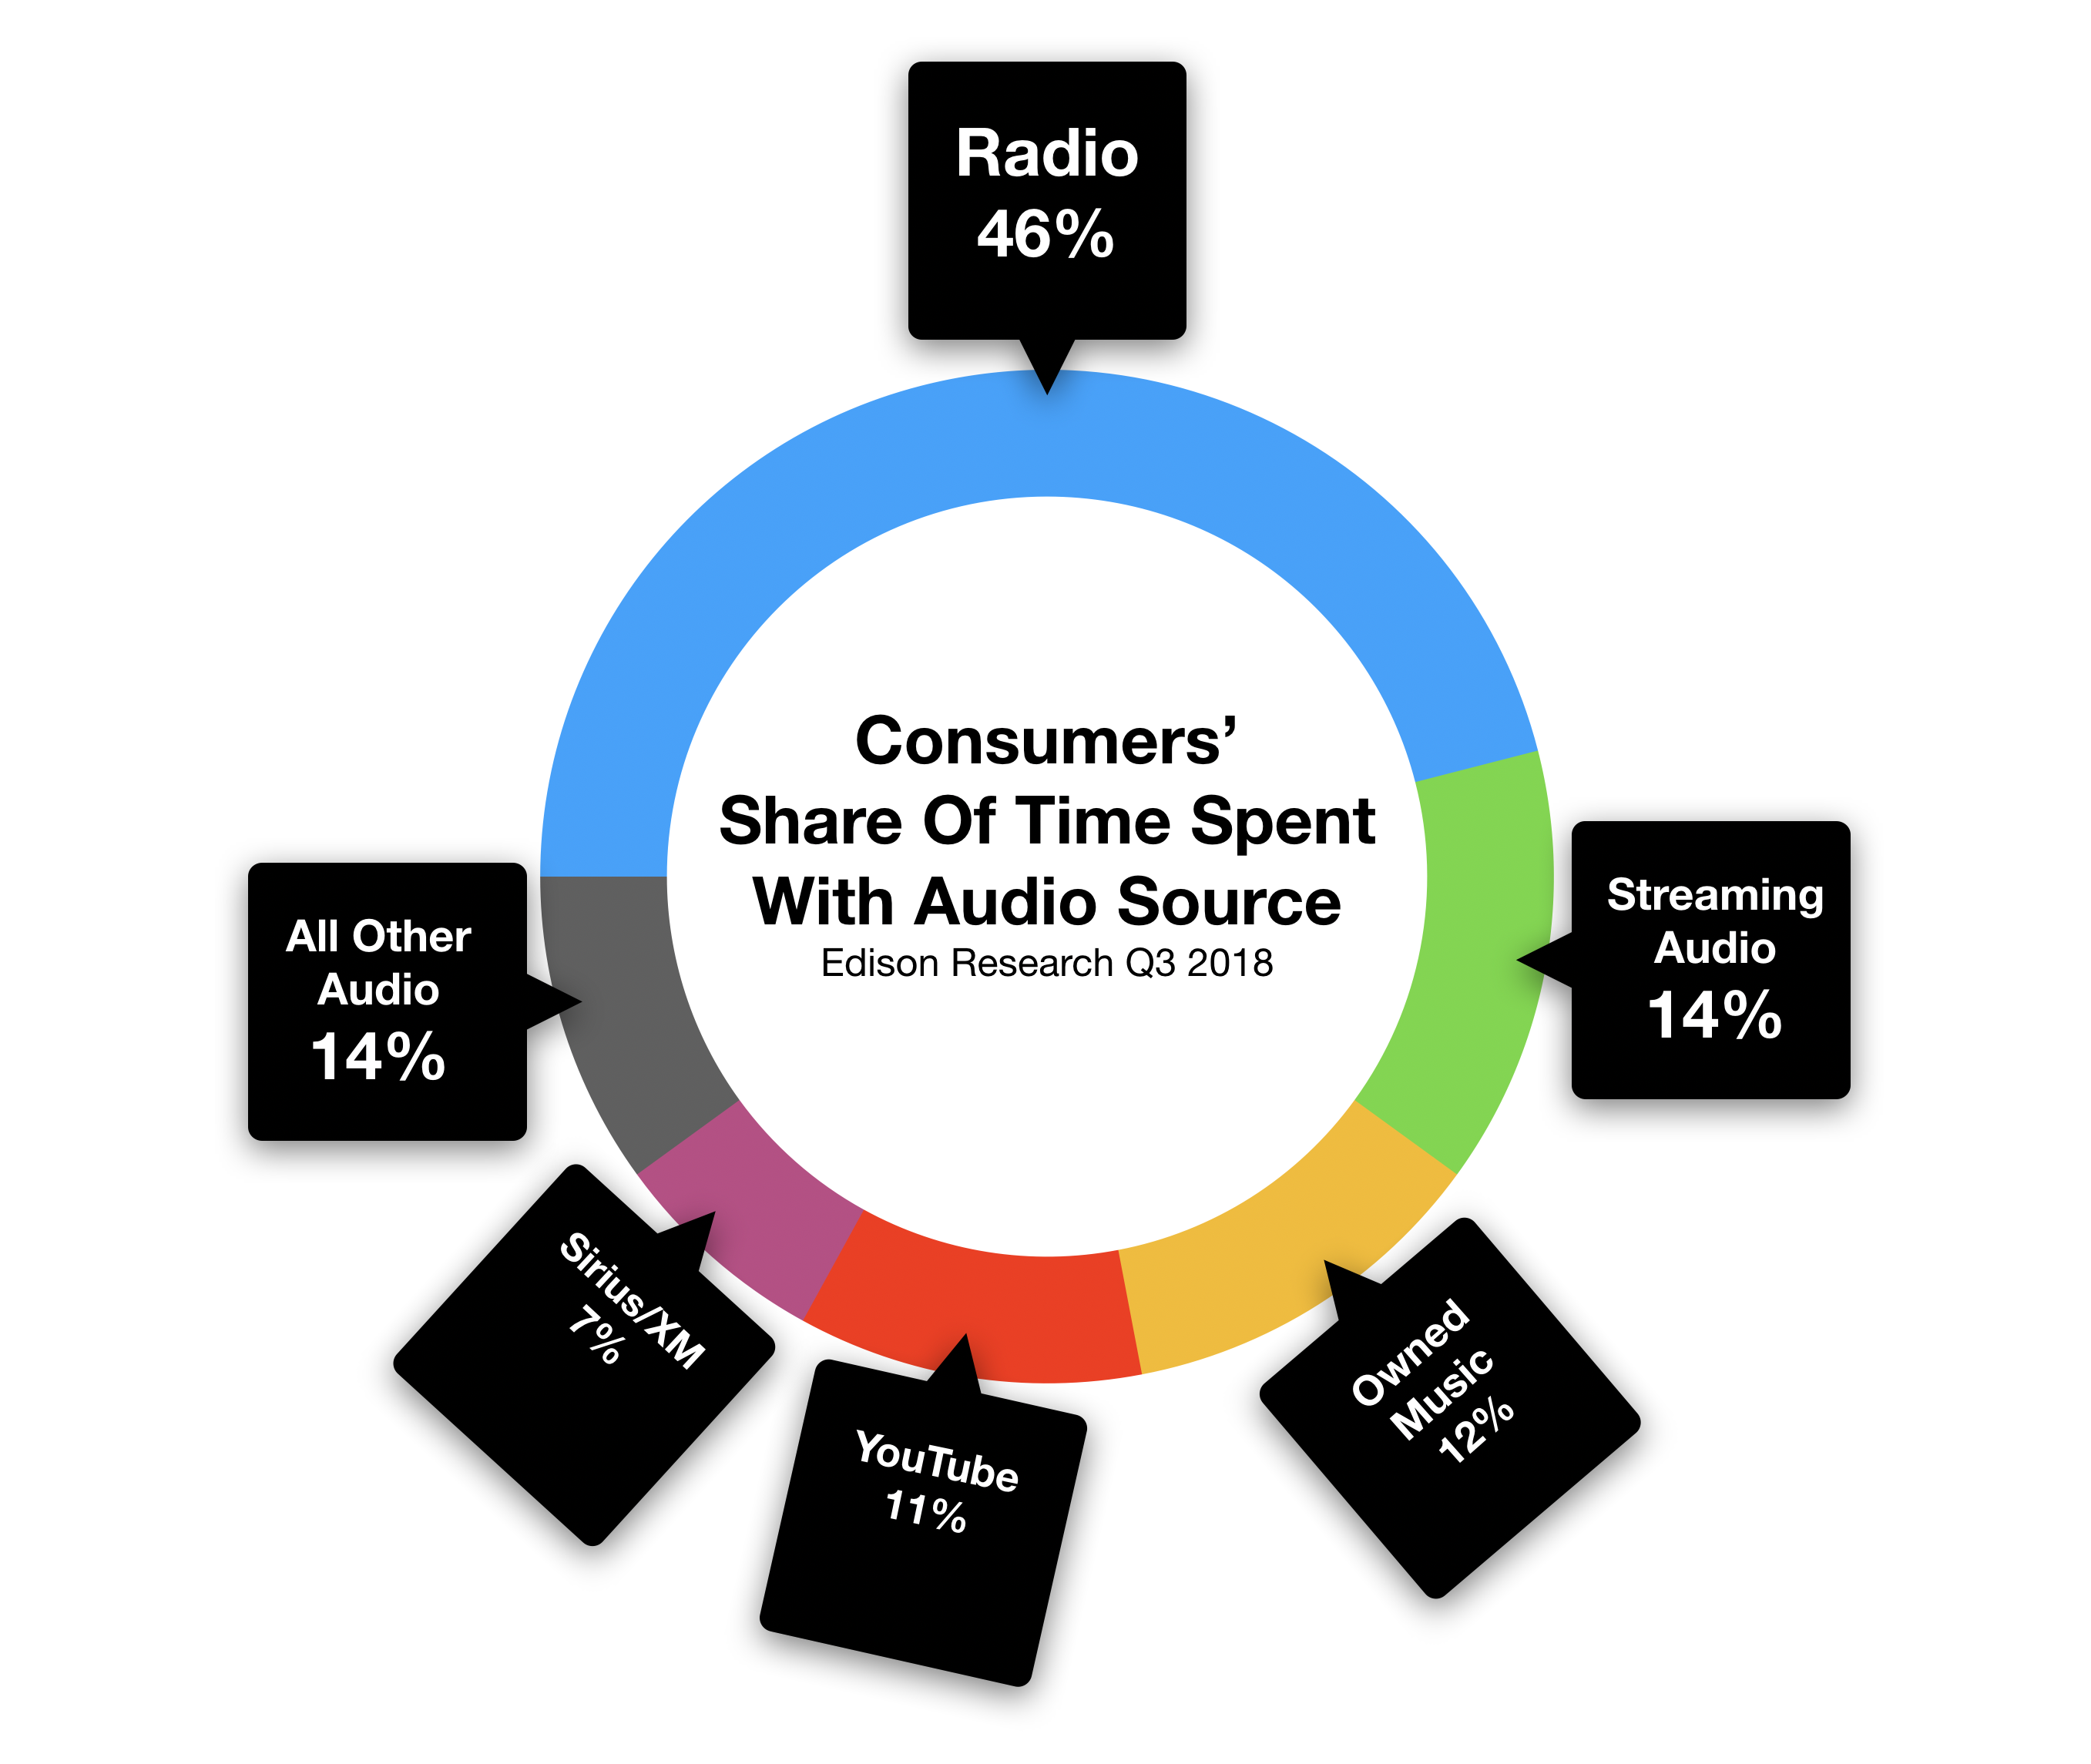 Philadelphia Consumer Share of Audio Time Spent With Radio